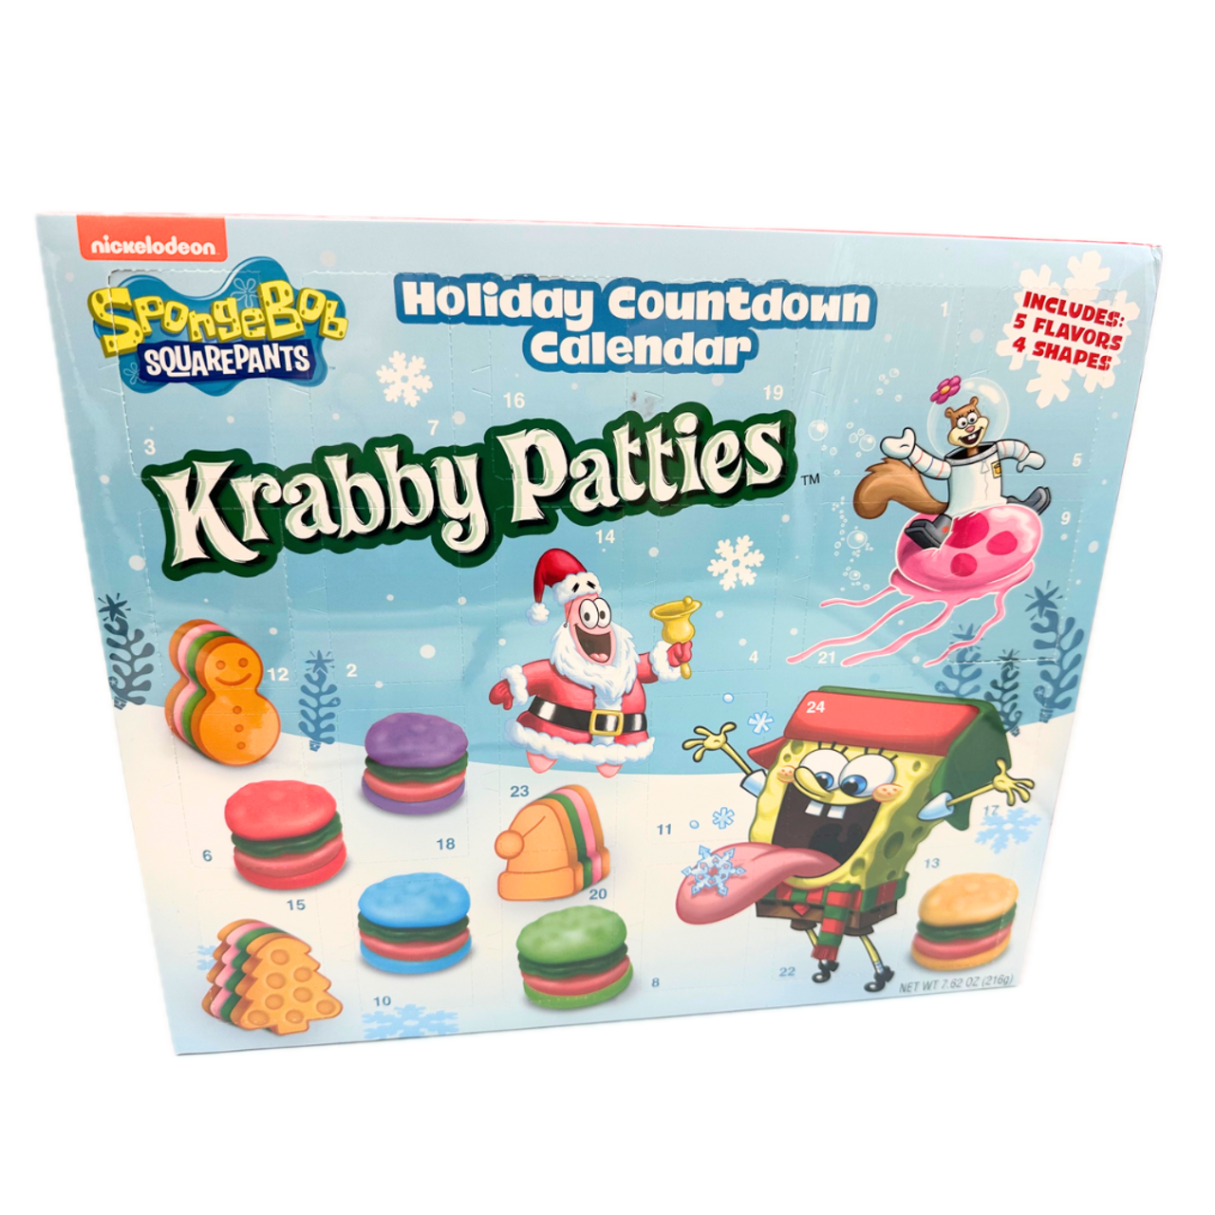 Frankford Spongebob Krabby Patty Holiday Countdown Calendar 7.62oz - 12ct